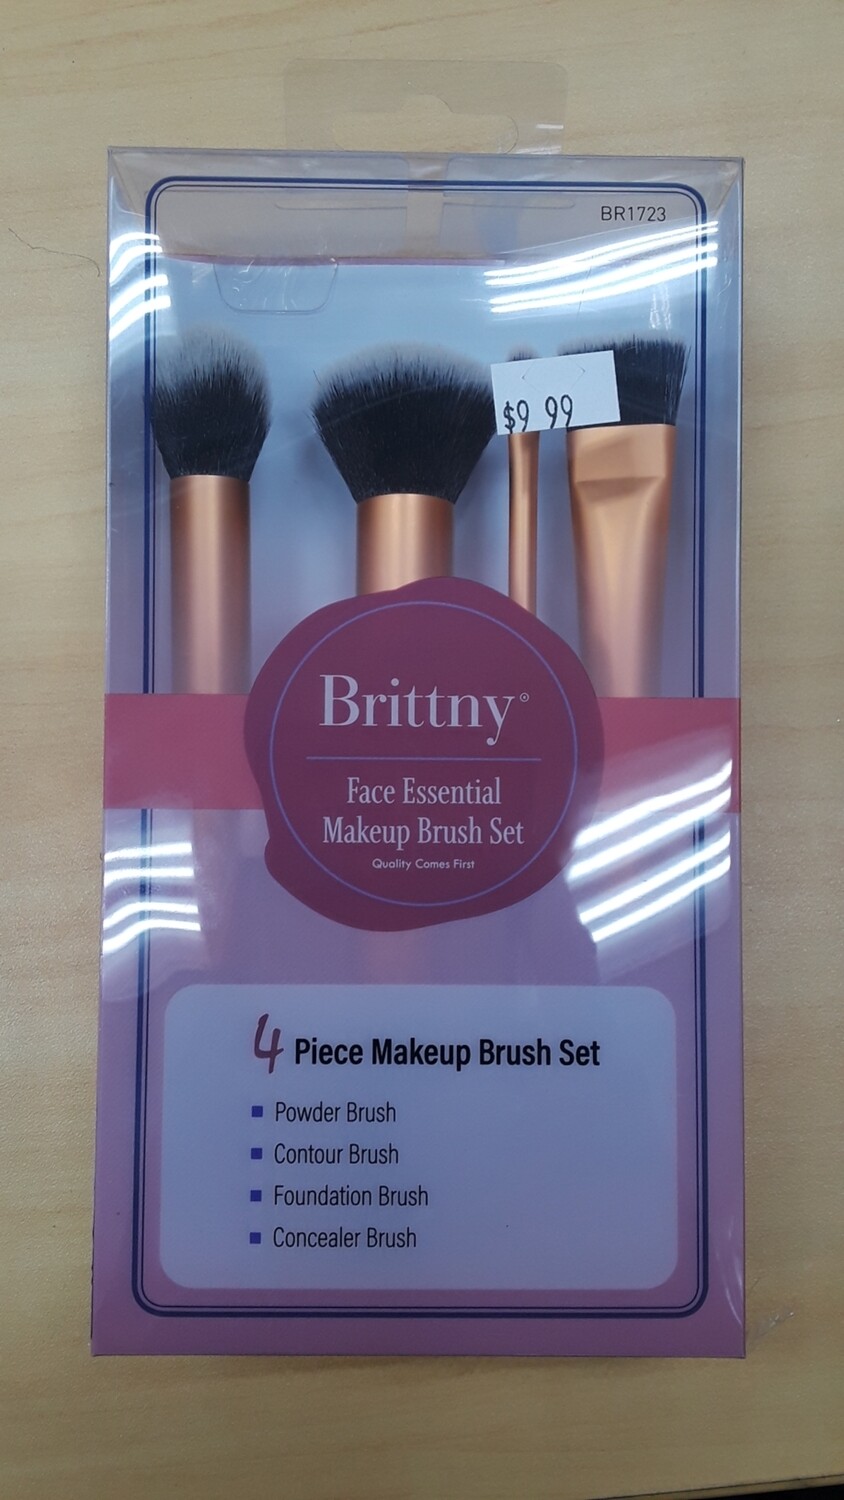 Brittny Face Essential